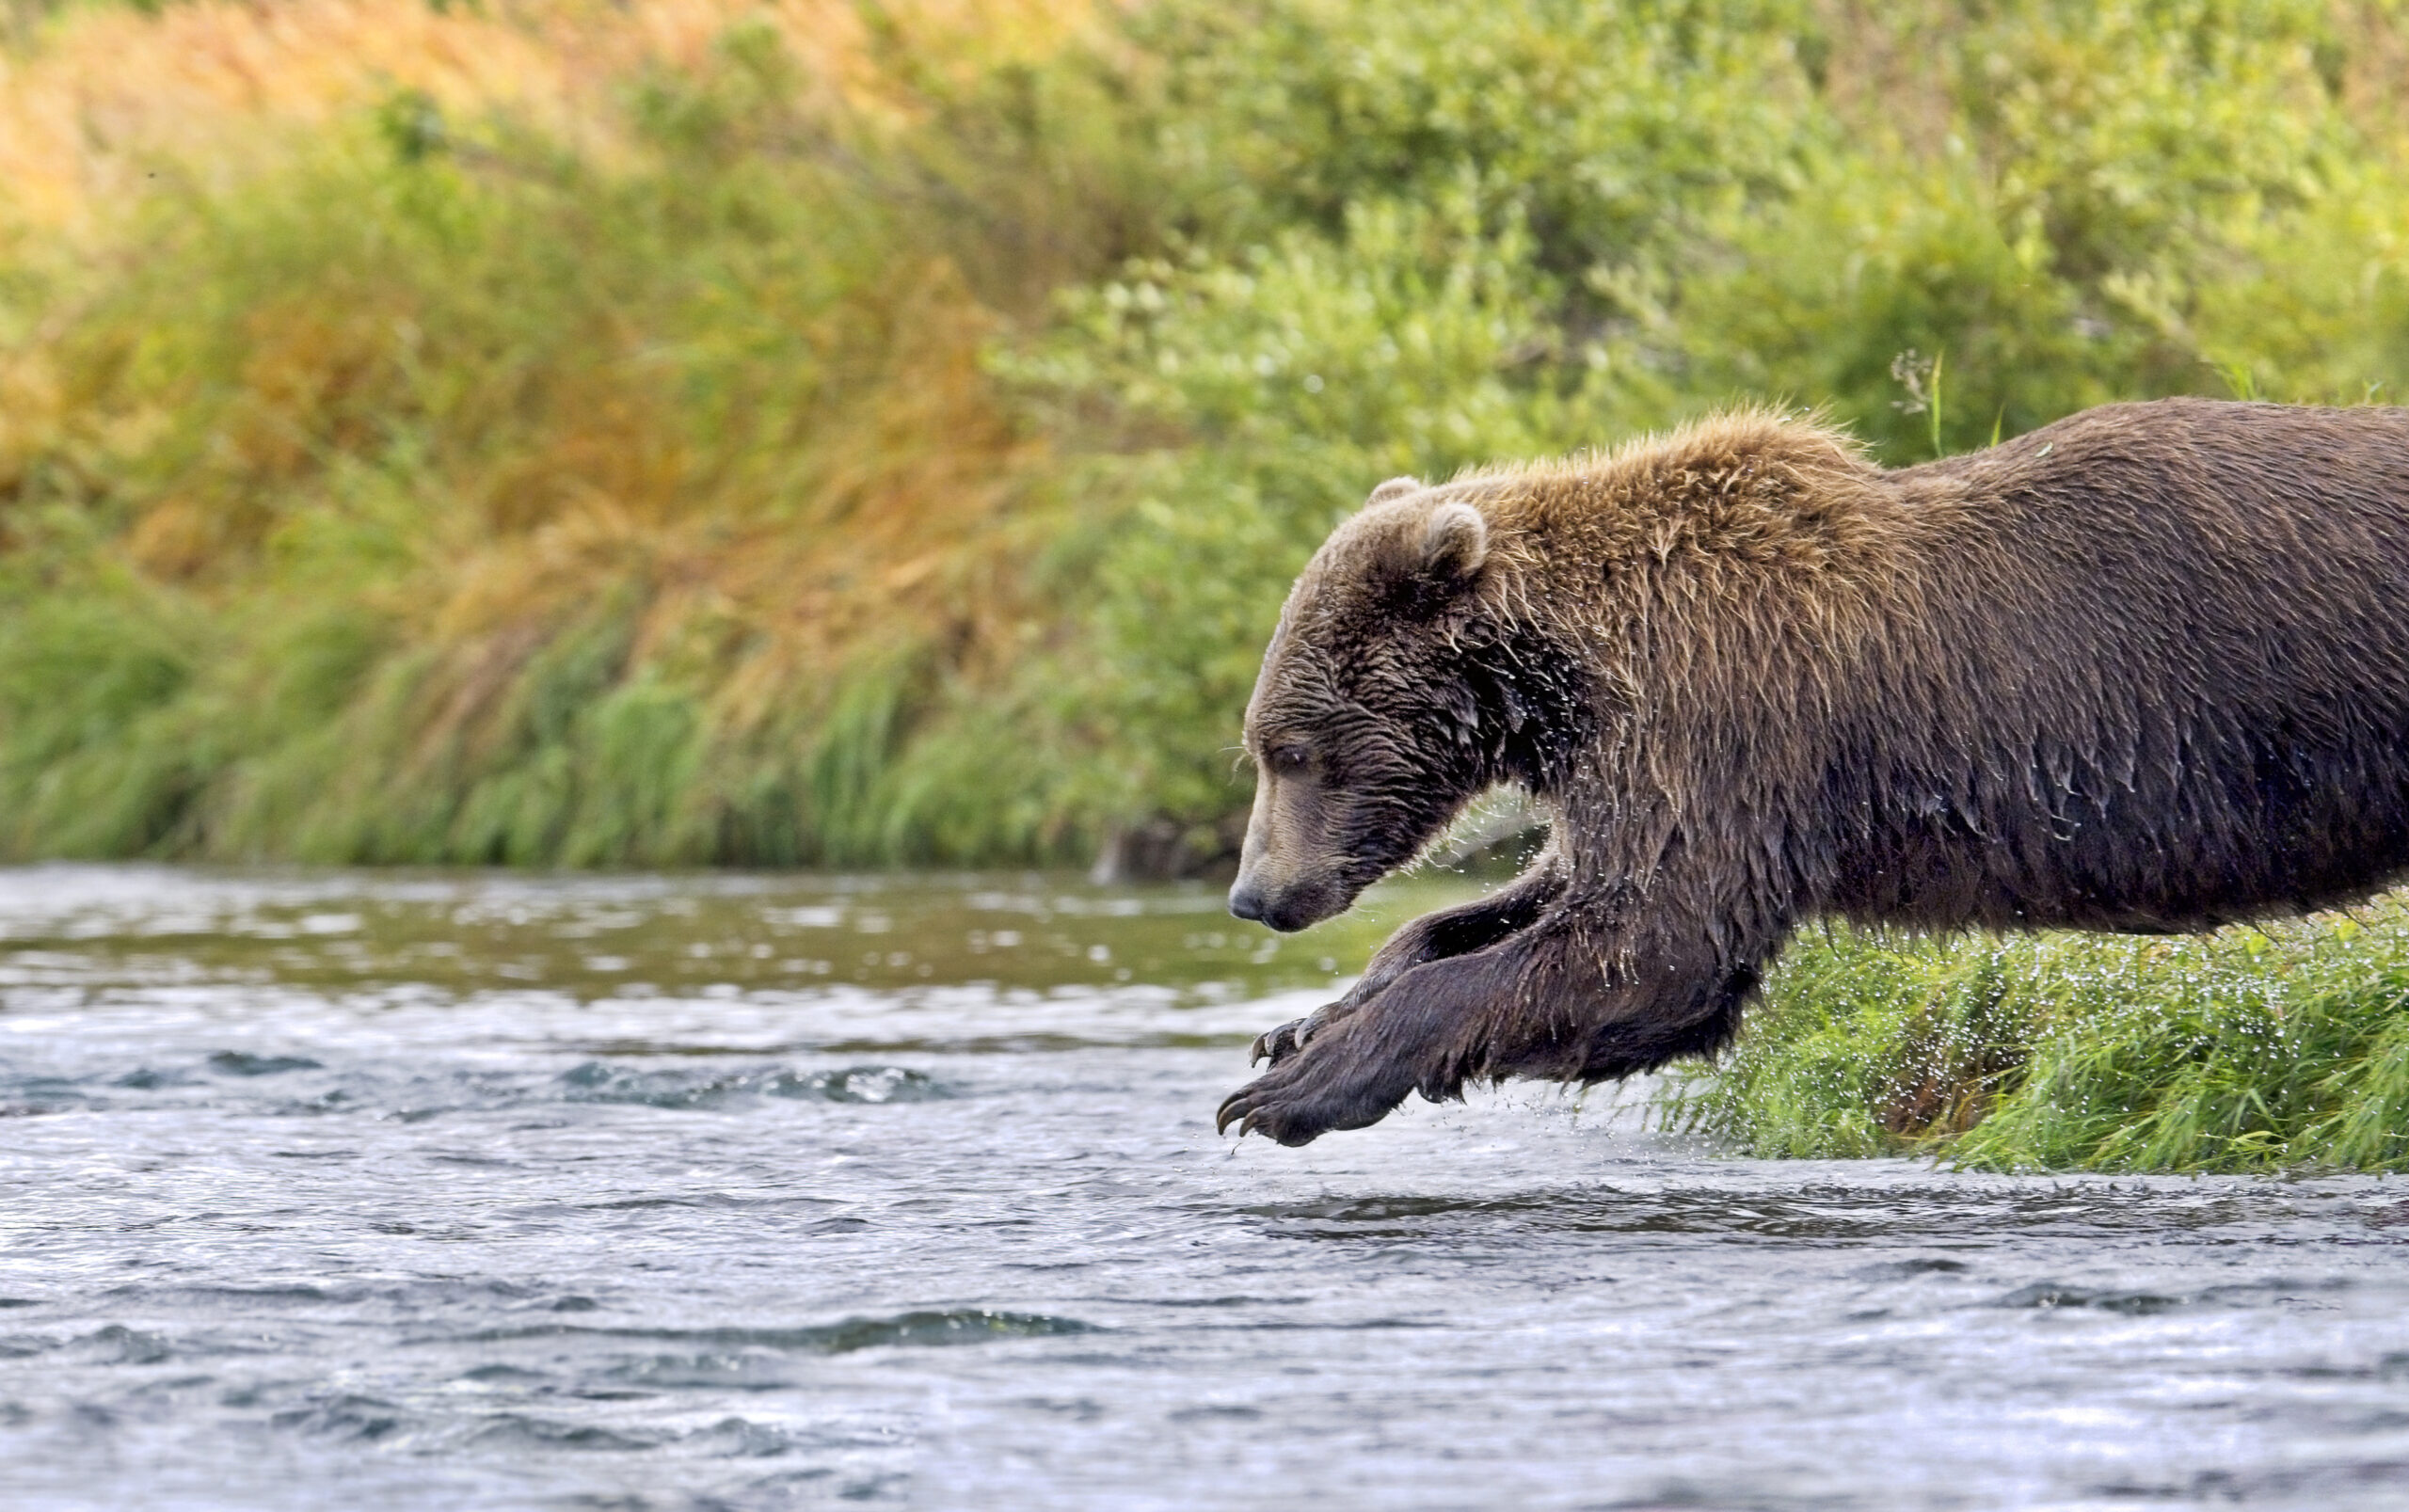 Grizzly Bear Dive - Photo by Tamara Lackey